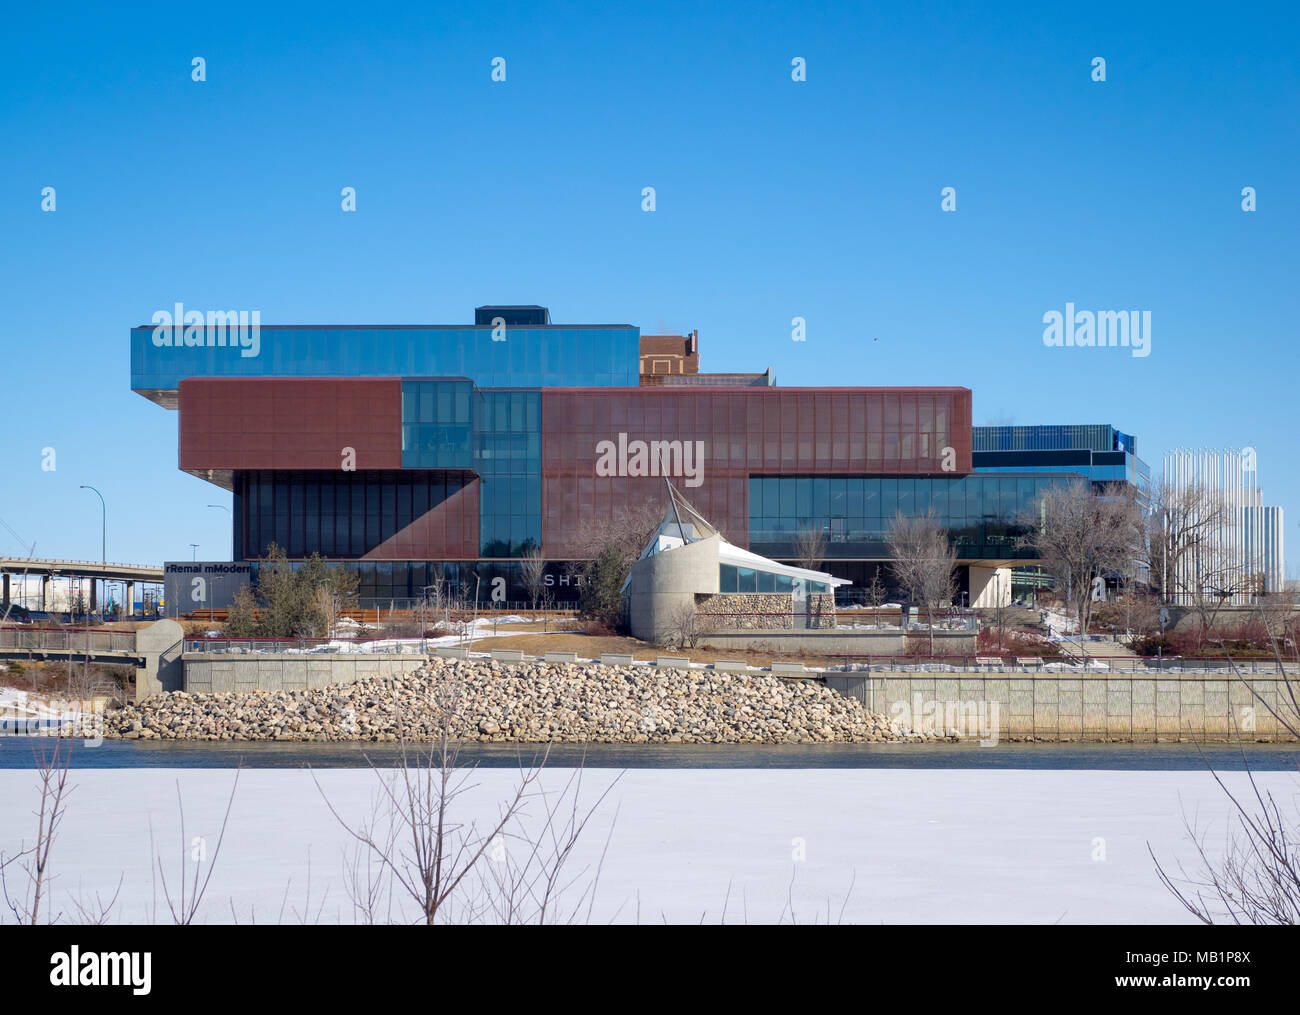 The exterior of the Remai Modern Art Gallery as seen from across the frozen South Saskatchewan River in Saskatoon, Saskatchewan, Canada. Stock Photo